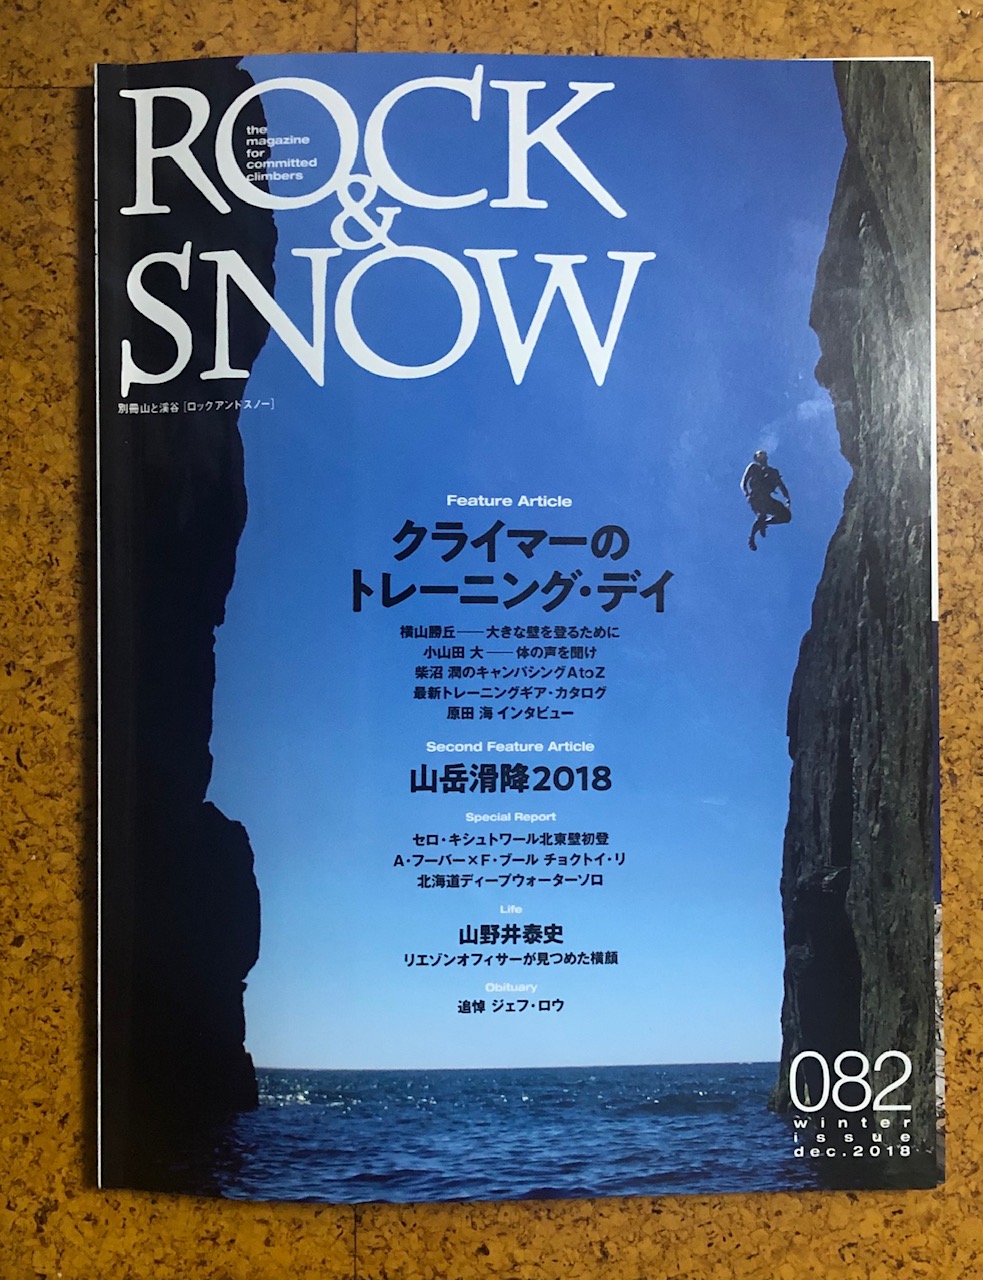 『Rock & Snow 082』の宣伝＆見どころ